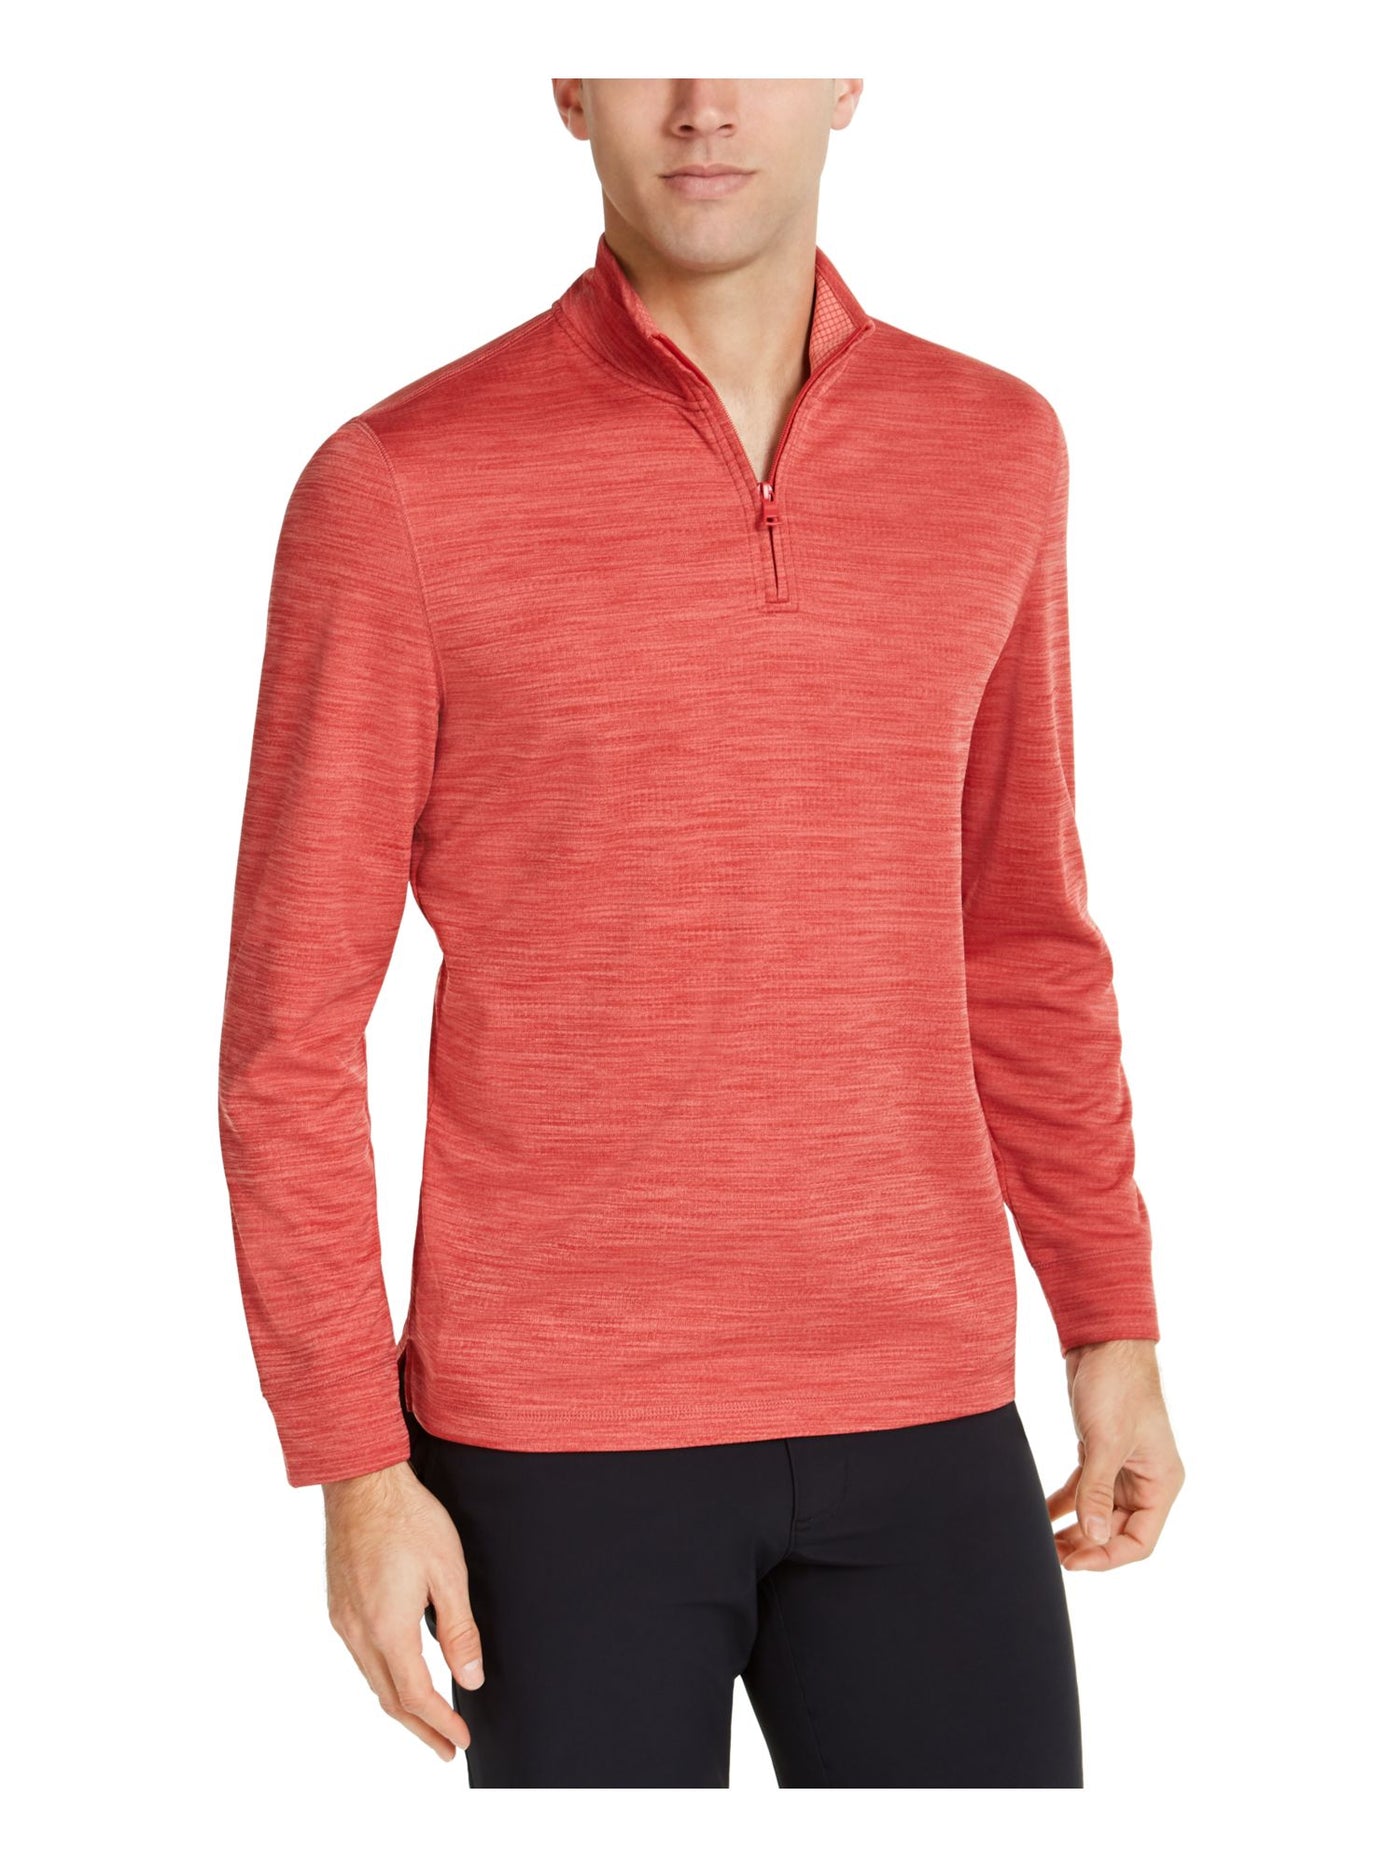 CLUBROOM Mens Coral Printed Collared Quarter-Zip Sweatshirt M